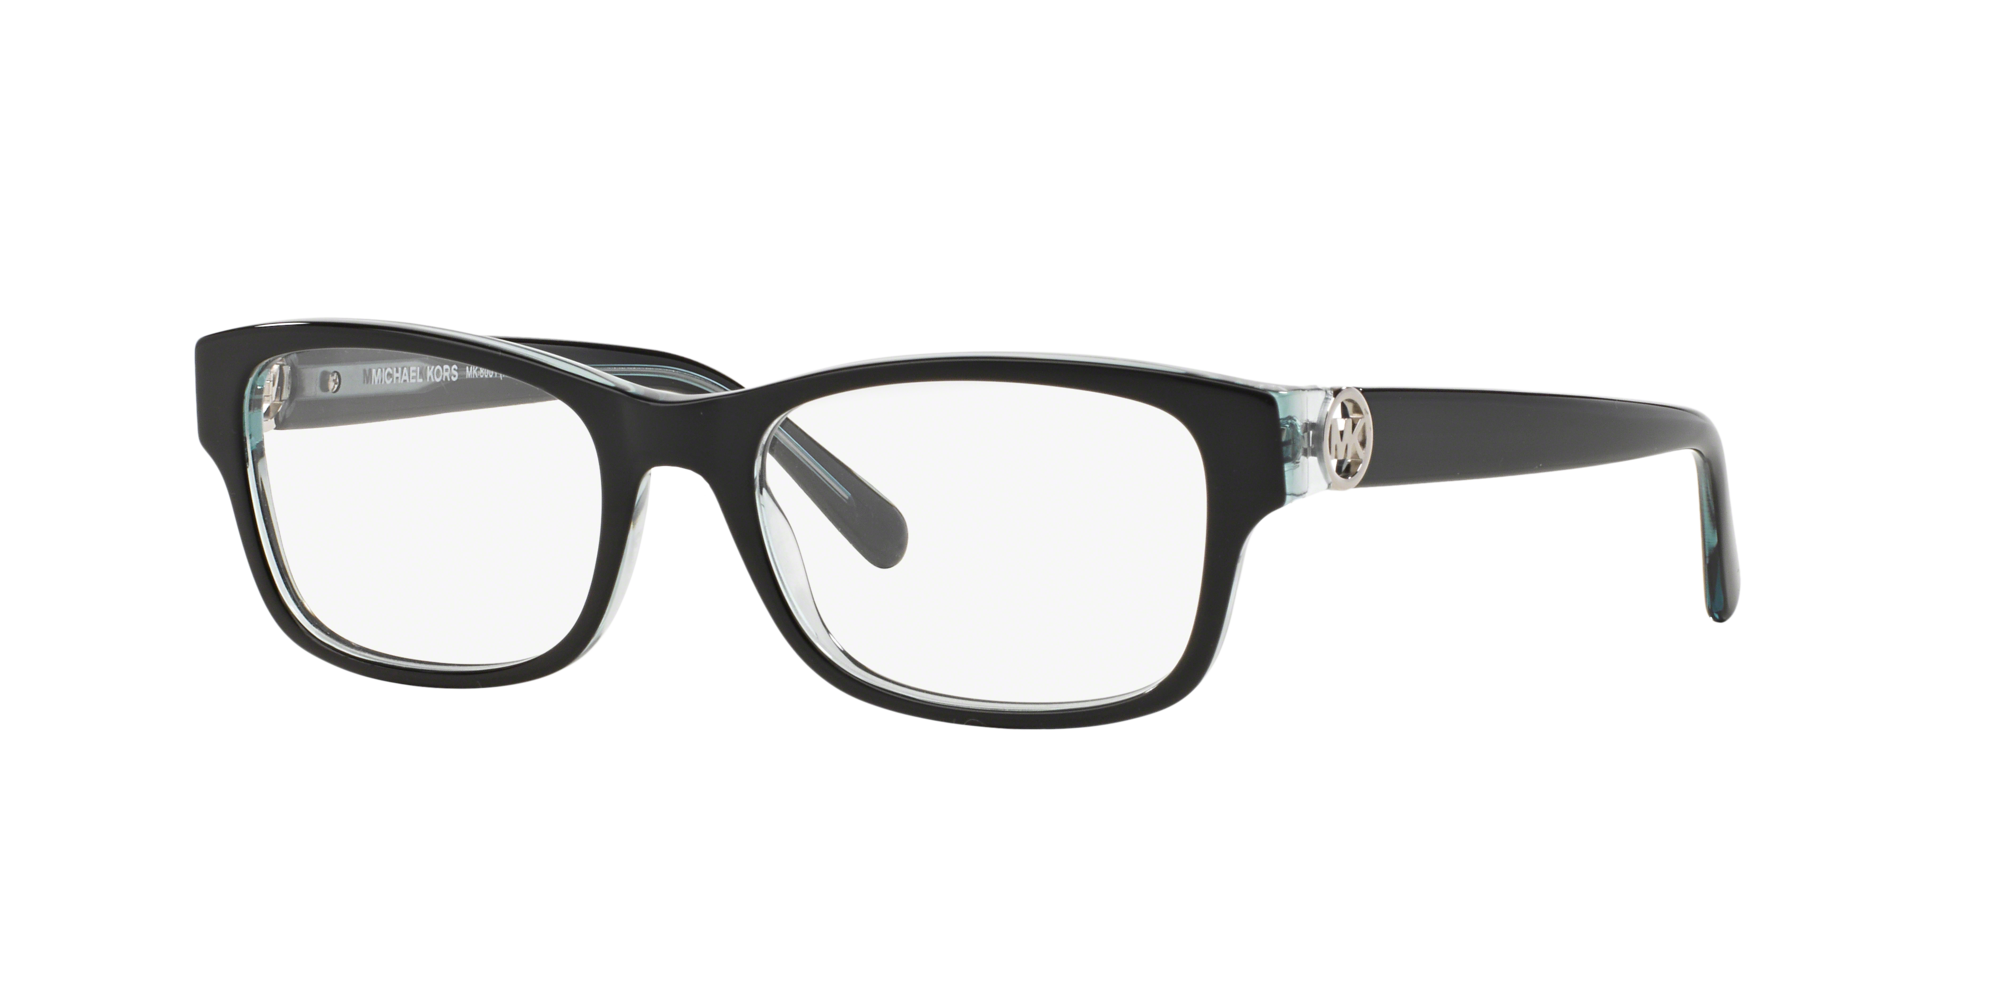 lenscrafters michael kors glasses